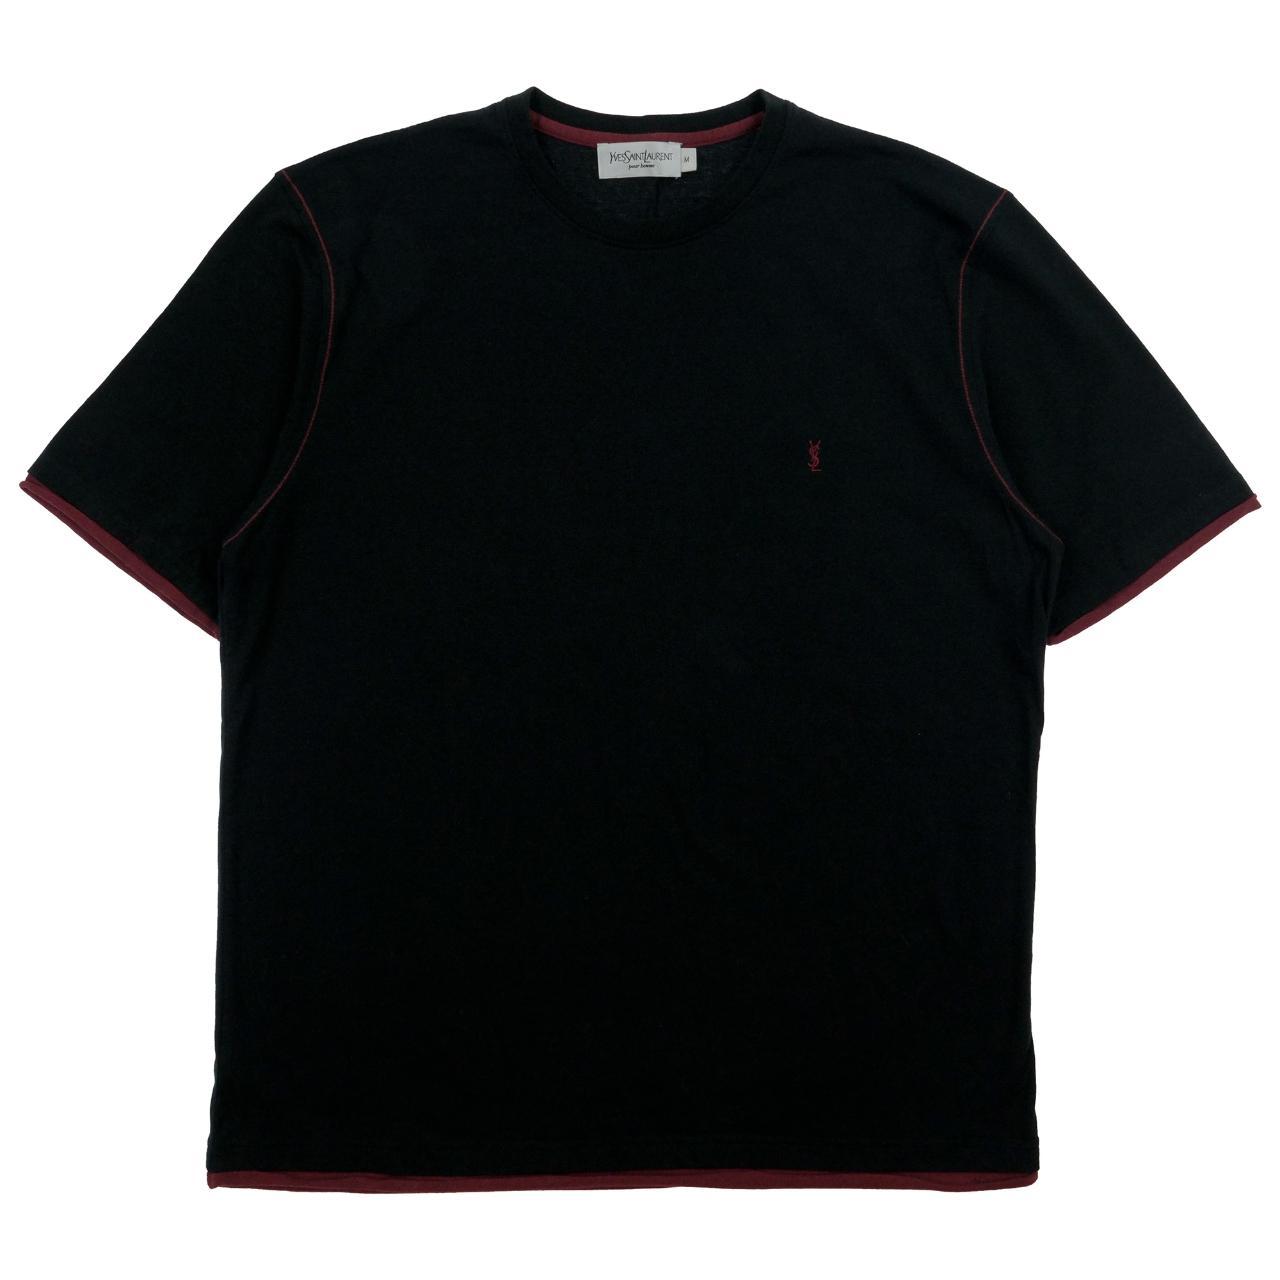 Yves Saint Laurent Men's Black and Red T-shirt | Depop